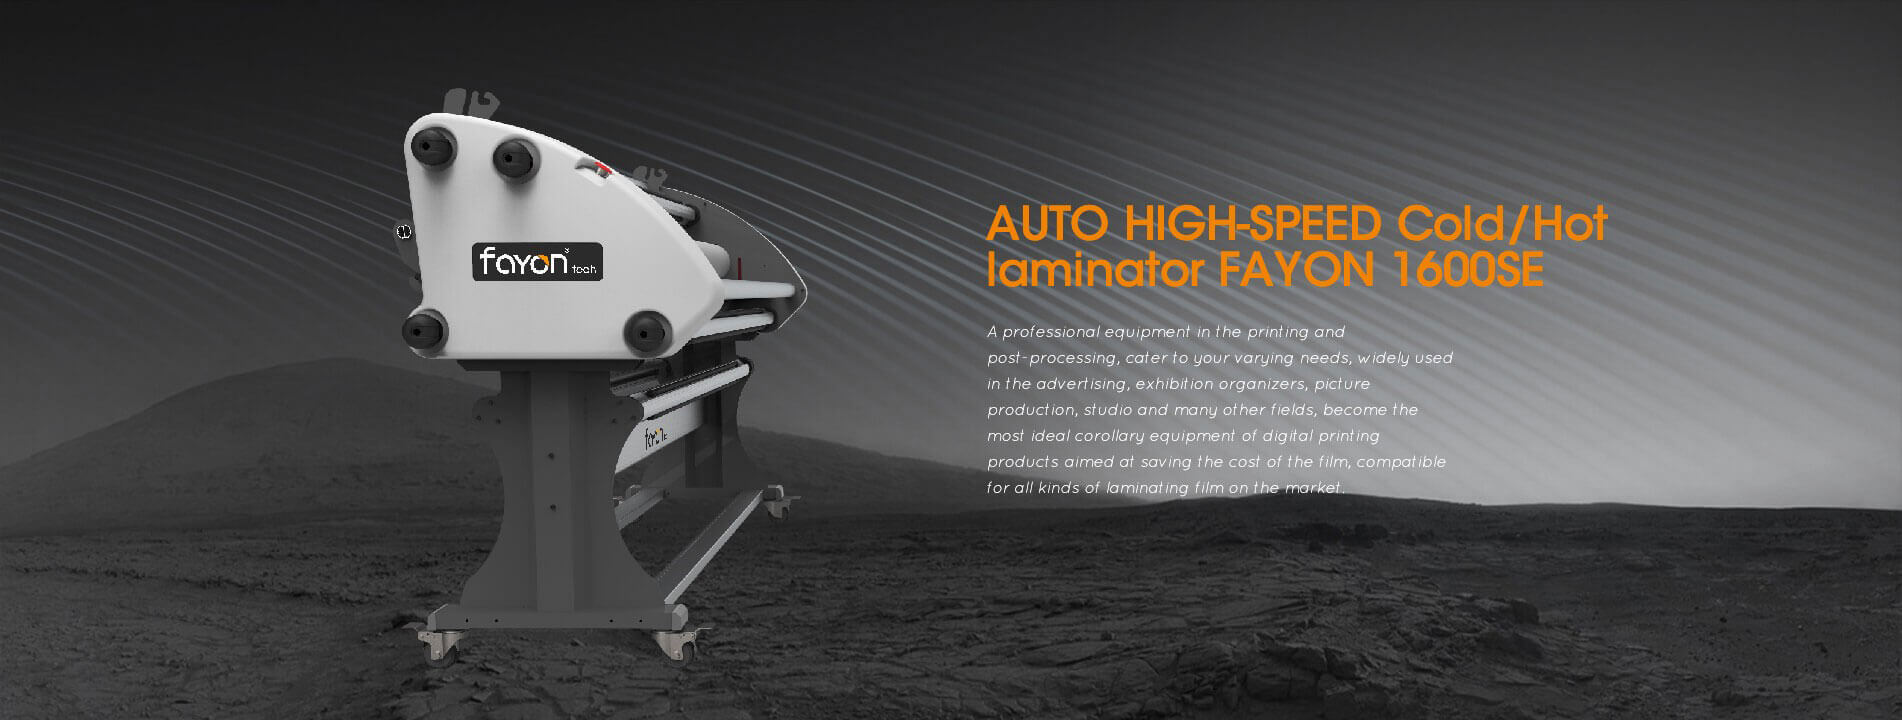 Auto High-Speed Cold/Hot  Laminator FAYON 1600SE